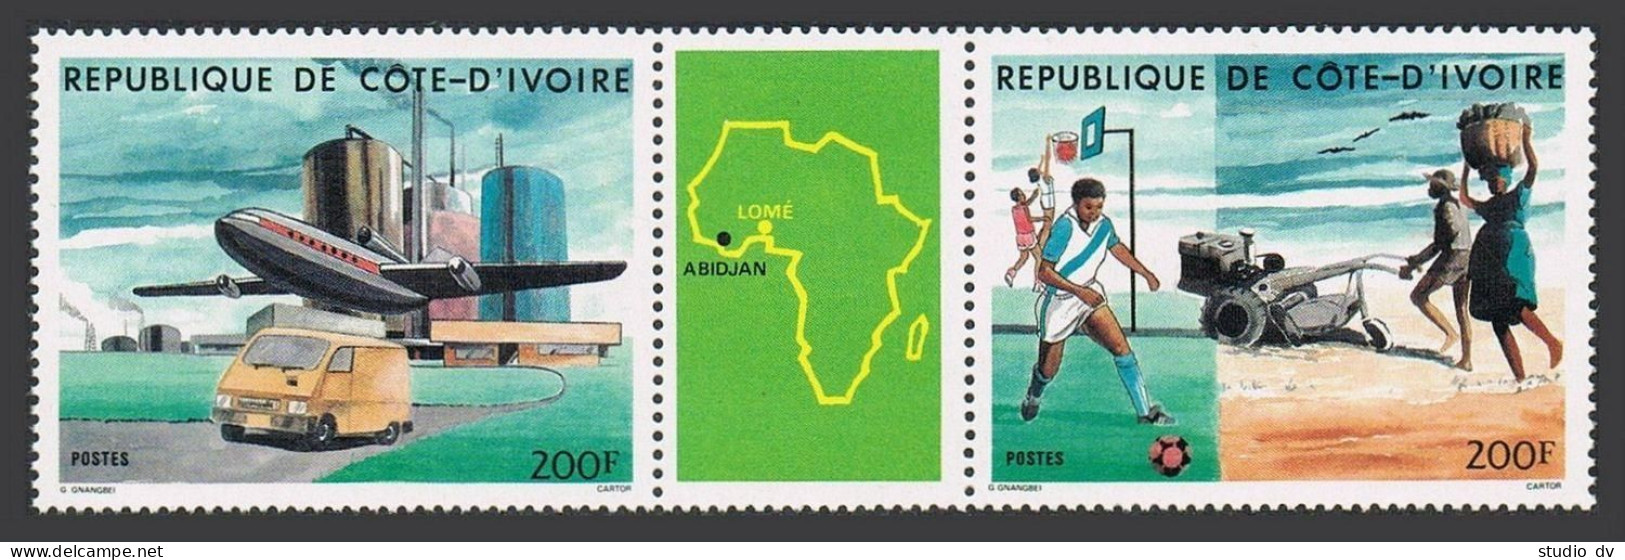 Ivory Coast 740-741a,MNH.Mi 851-852. PHILEXAFRICA-1985.Factory,jet,van;Soccer. - Costa D'Avorio (1960-...)